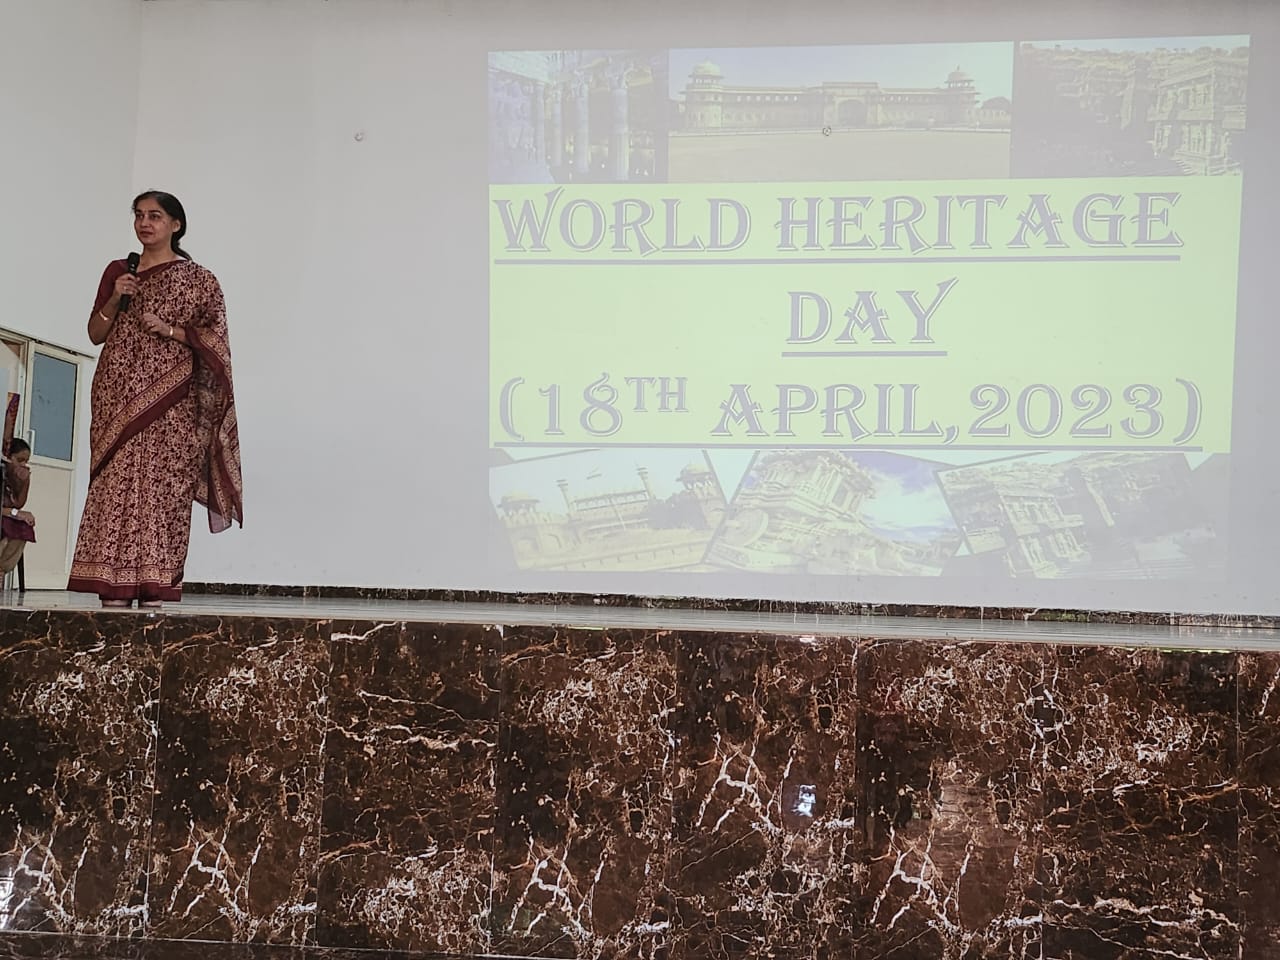 World Heritage Day Celebration held on 18th April 2023